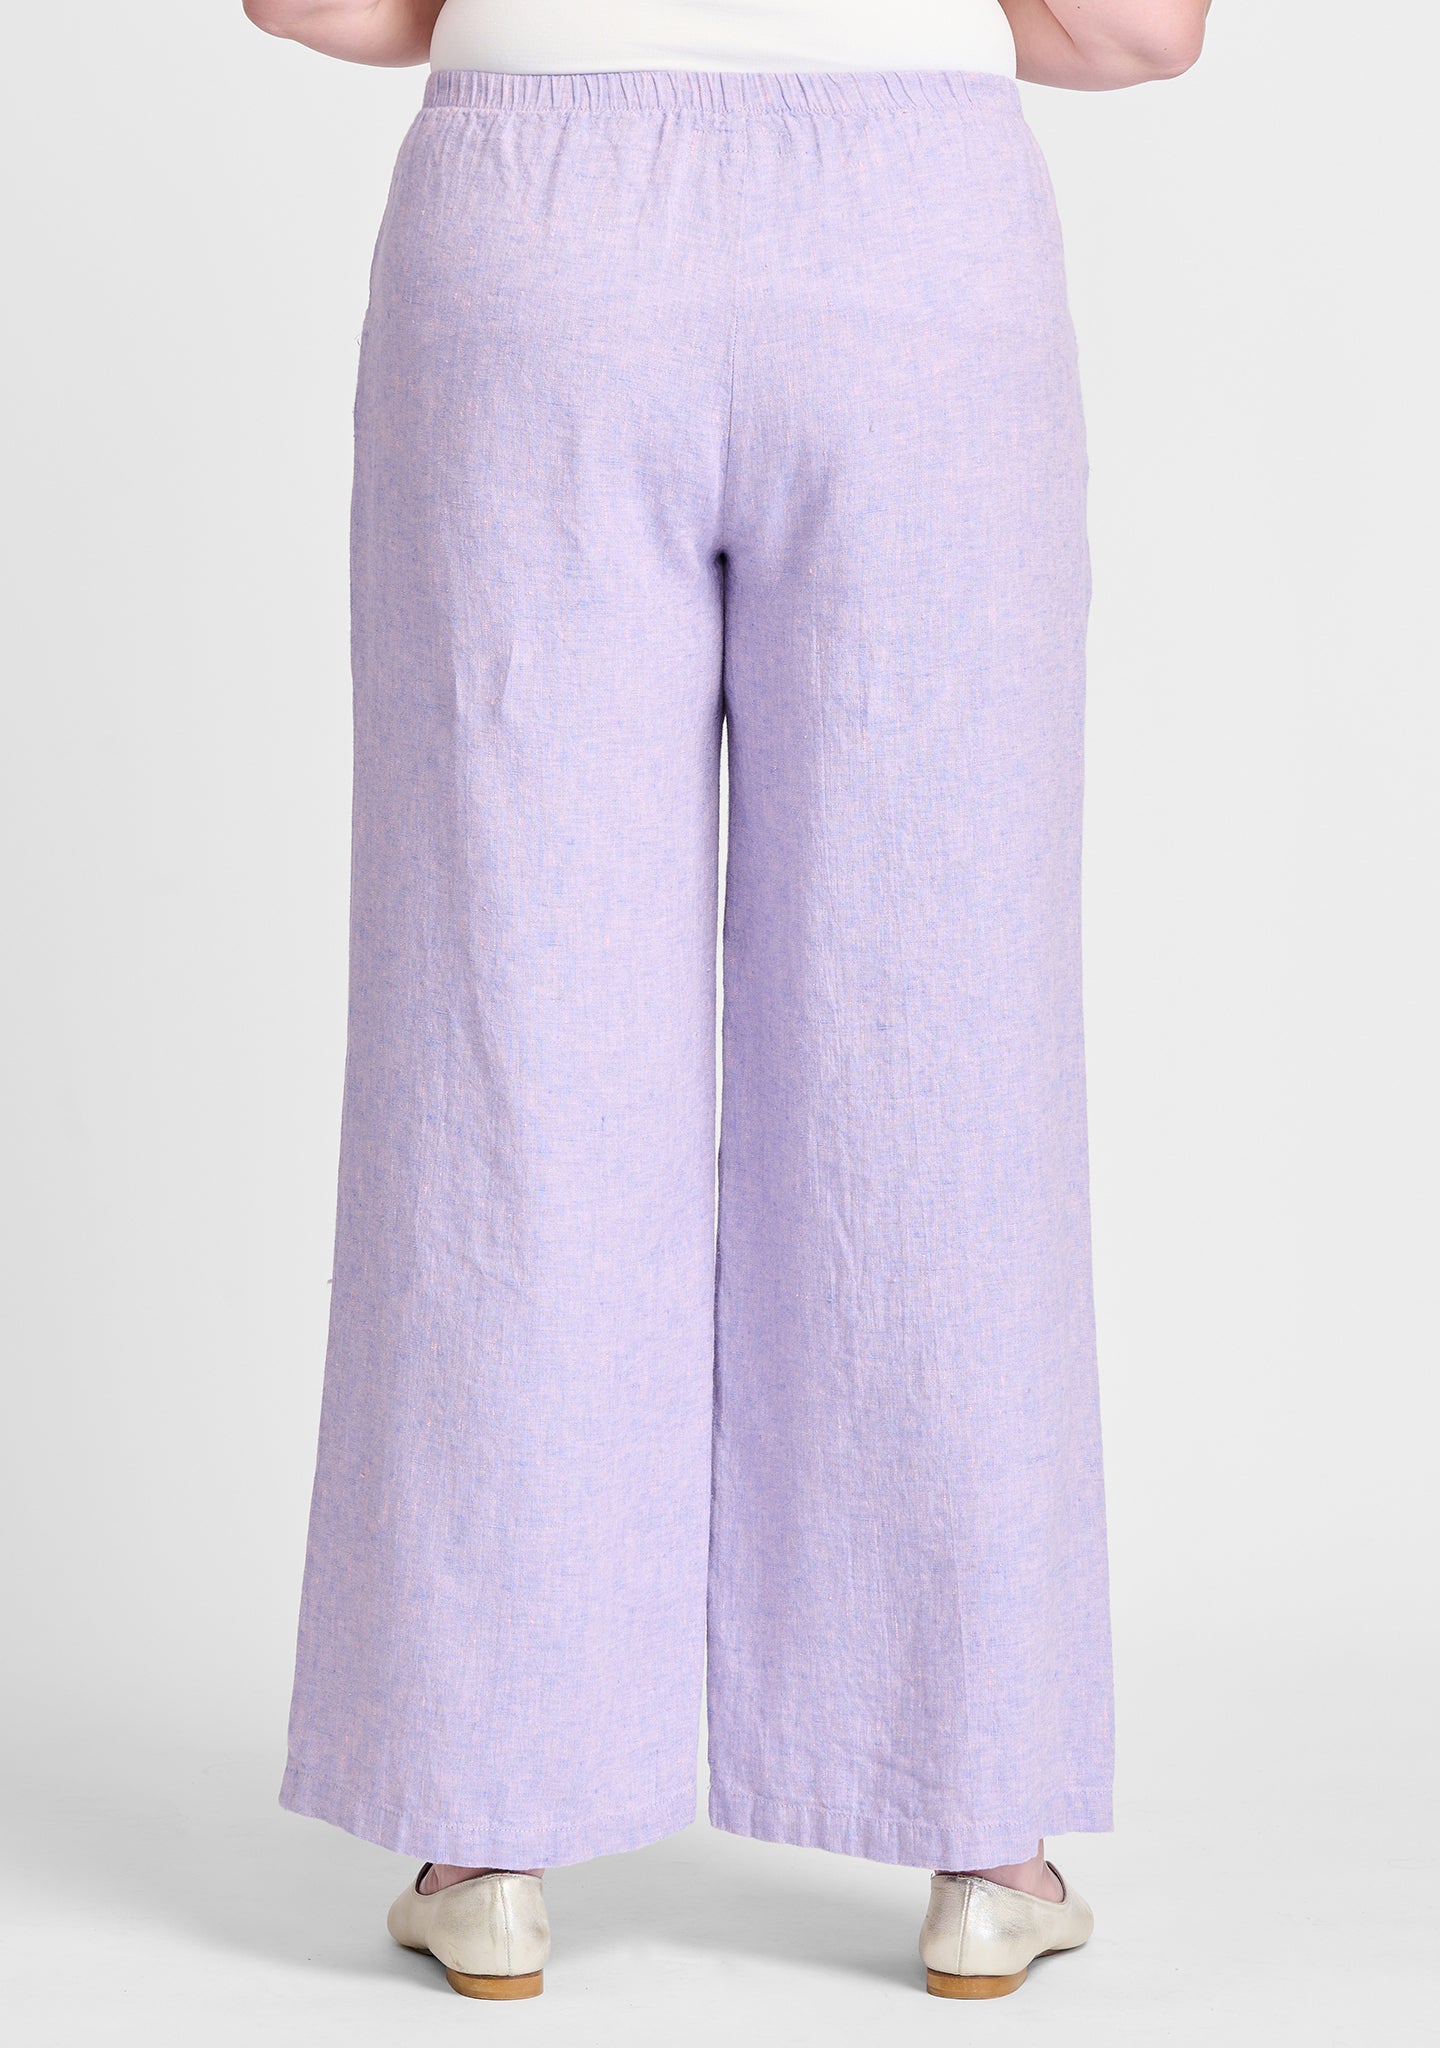 flowing pant linen pants with elastic waist details